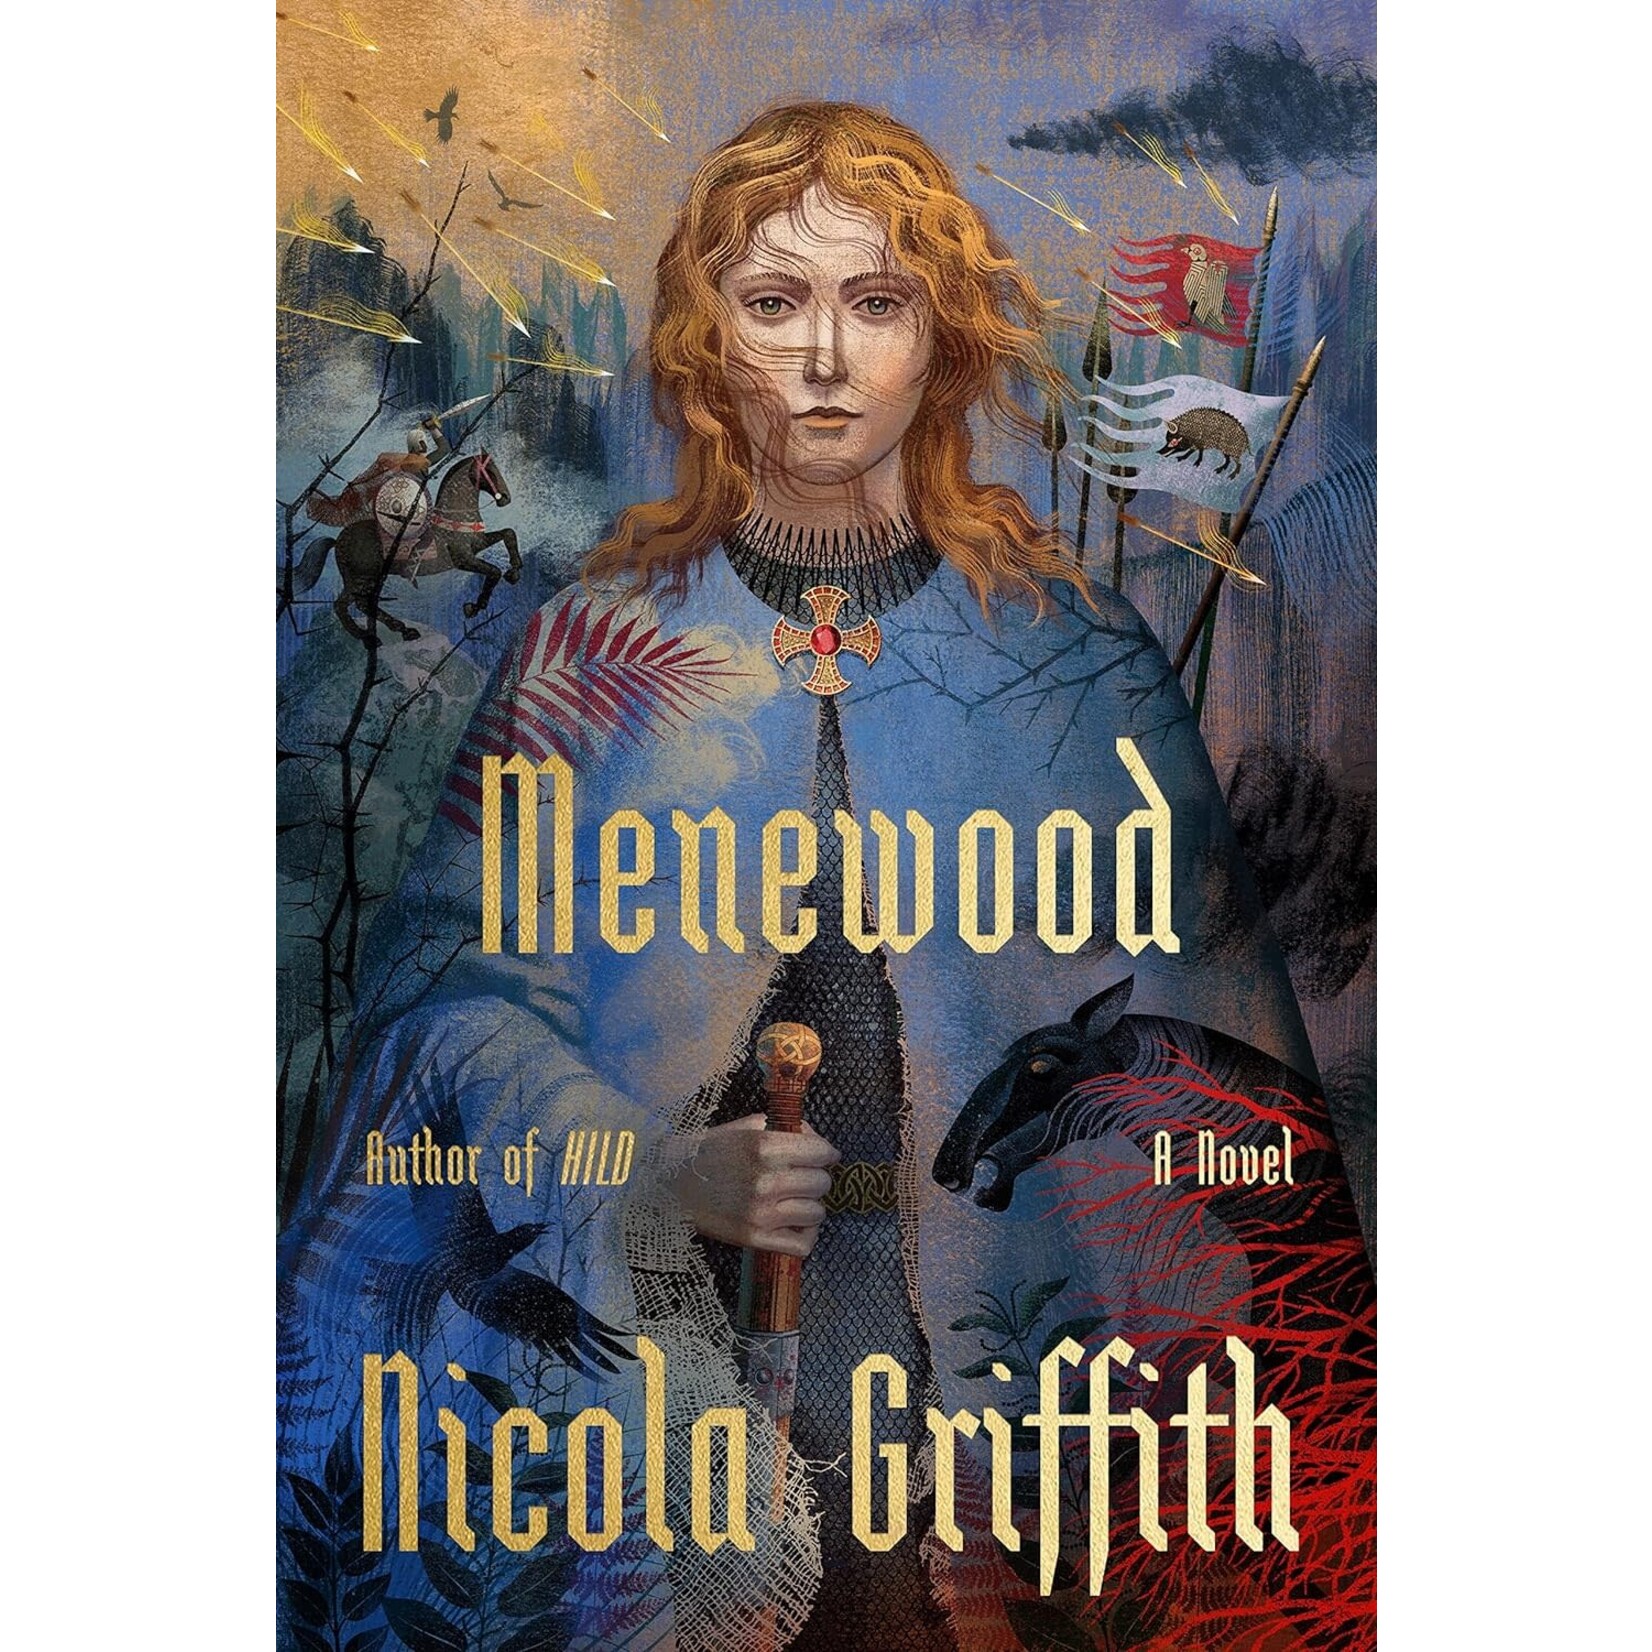 Menewood: A Novel (The Hild Sequence #2) - SIGNED COPY